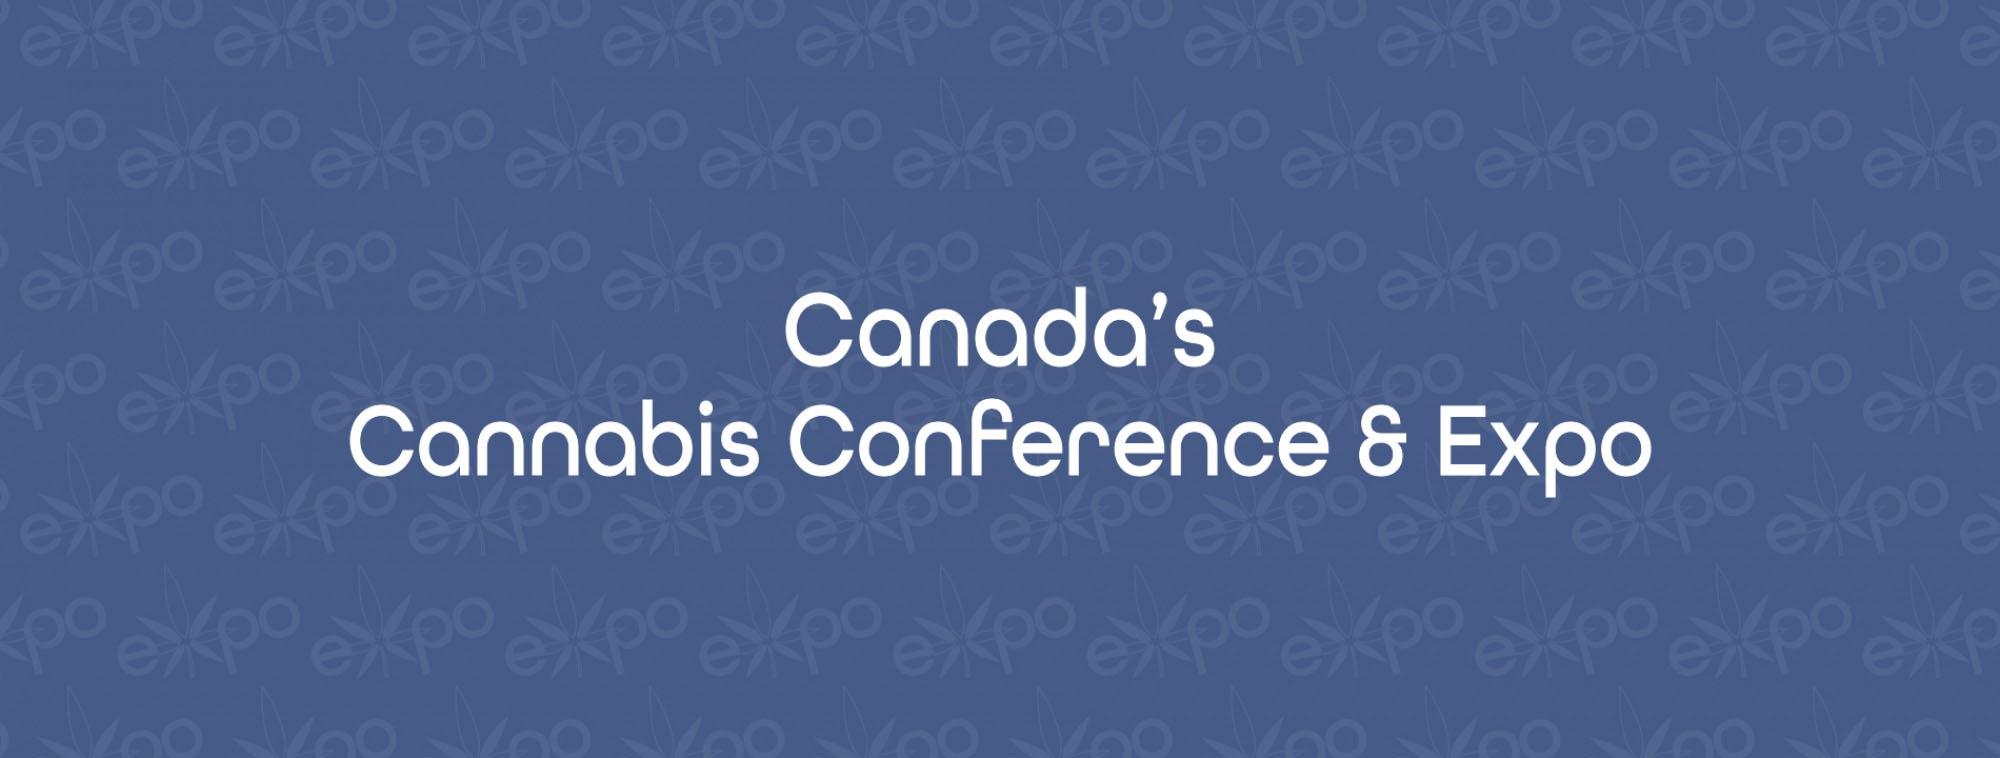 cannabis-conference-canada